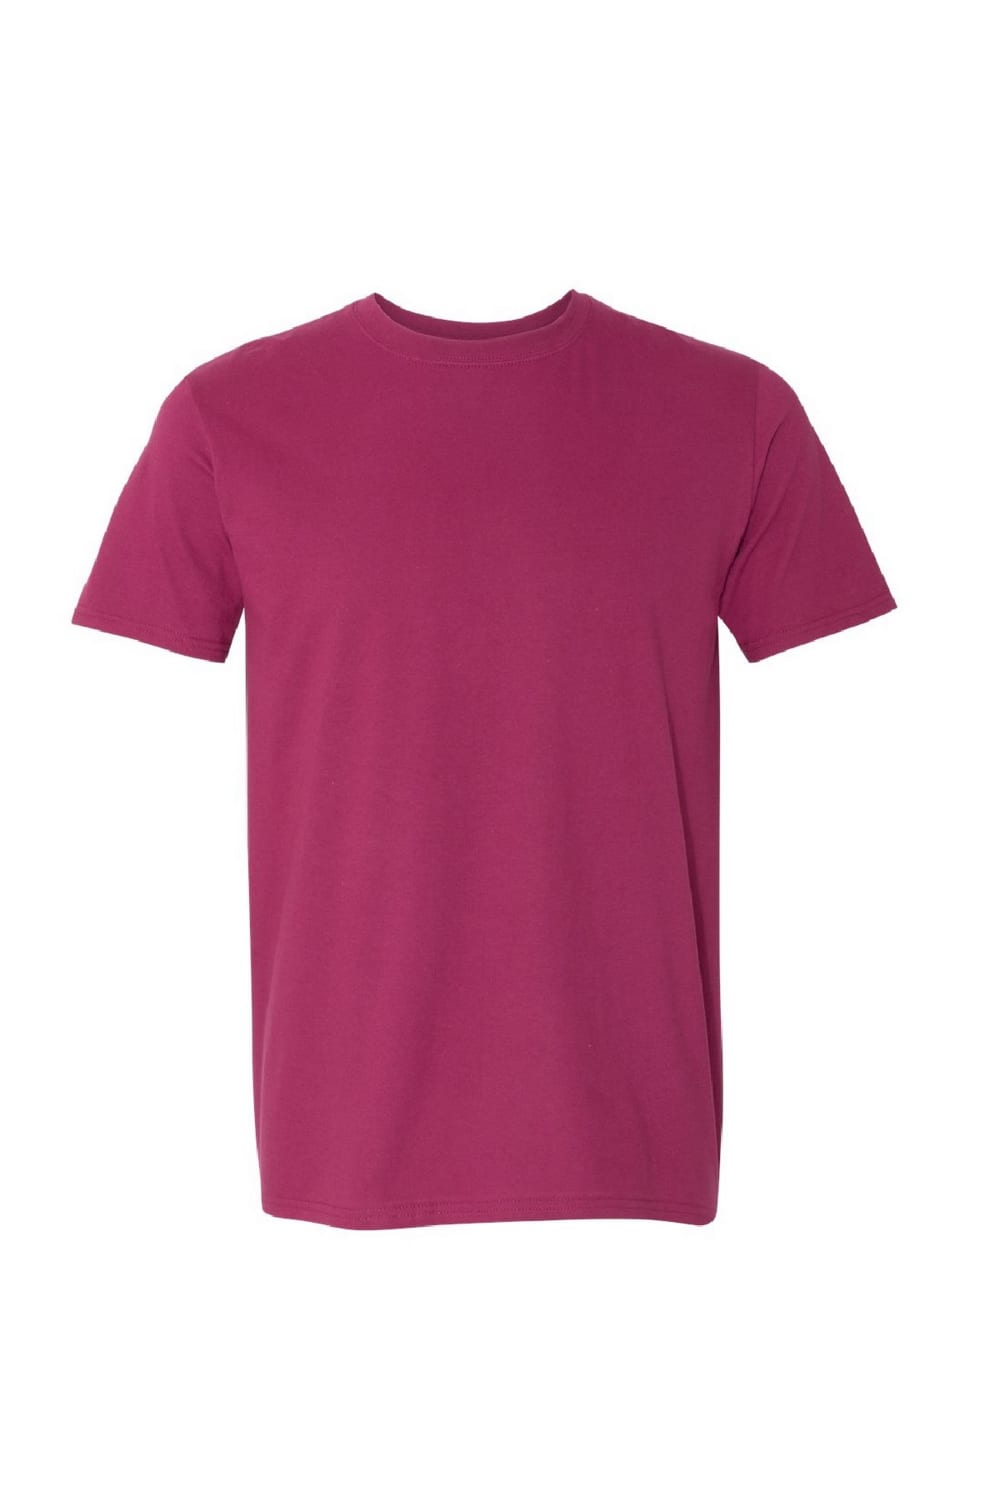 Gildan Mens Short Sleeve Soft-Style T-Shirt (Berry)